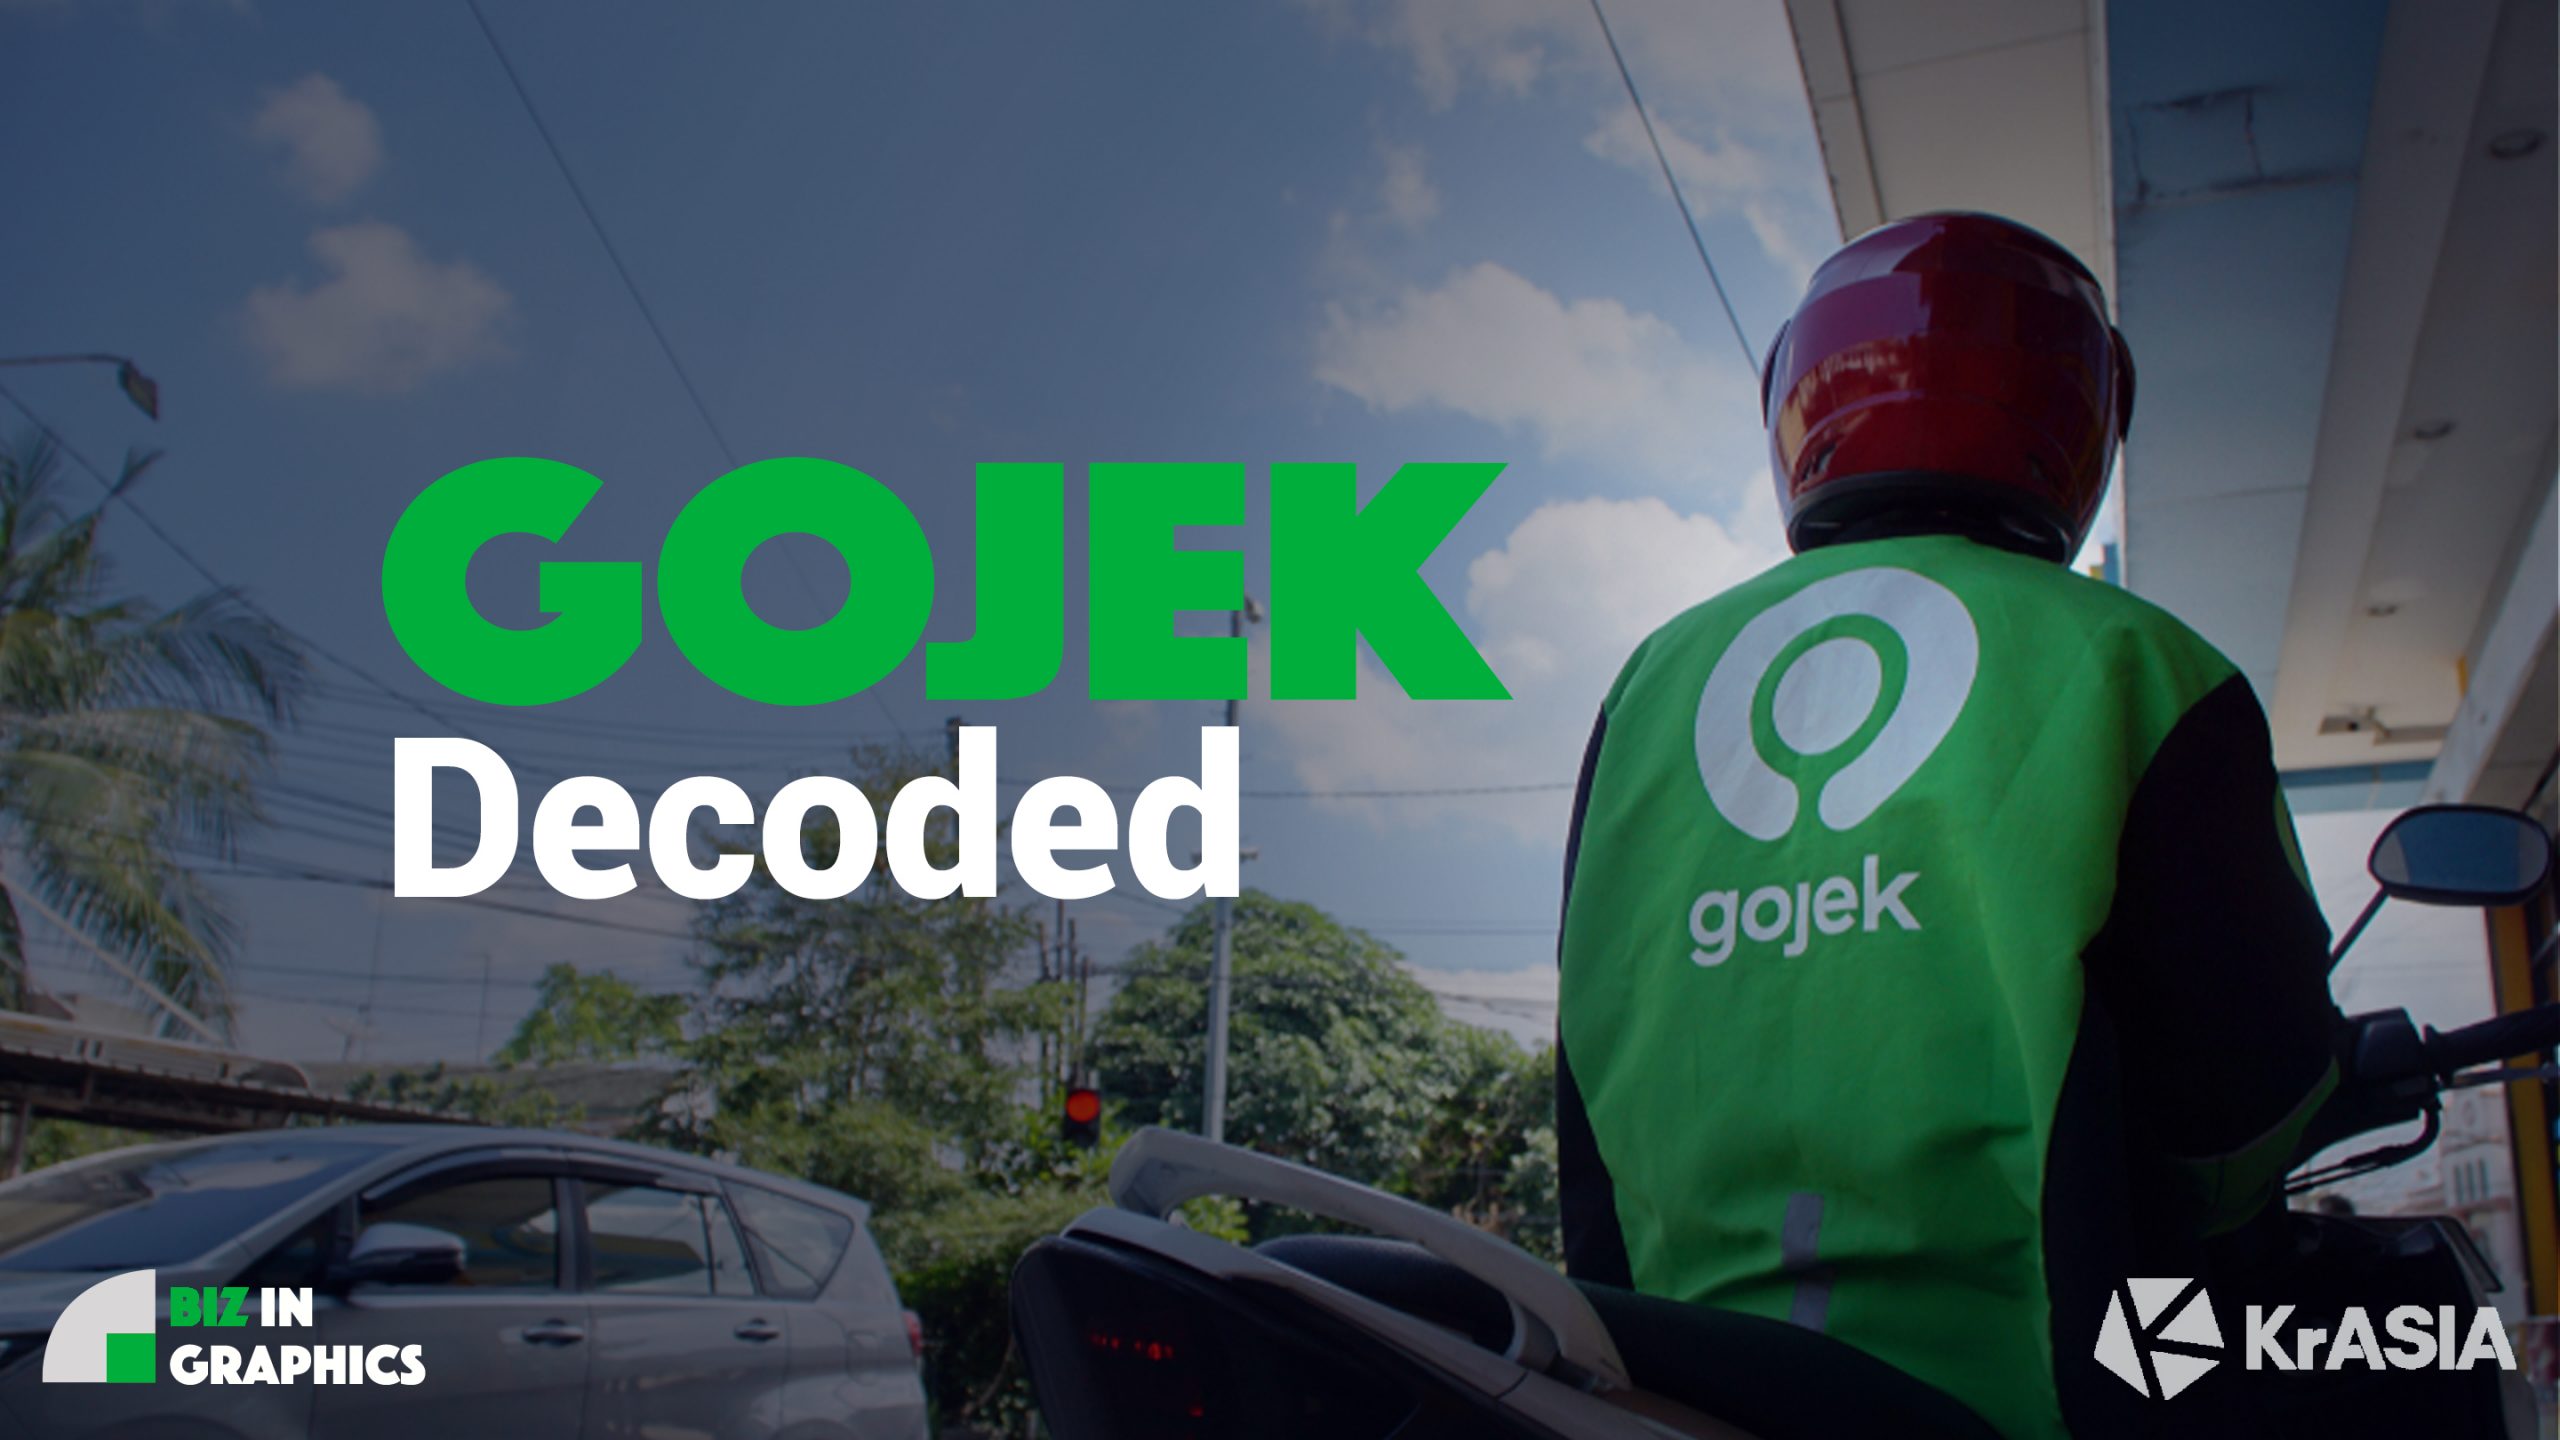 BIZ IN GRAPHICS | What fuels Gojek’s success?